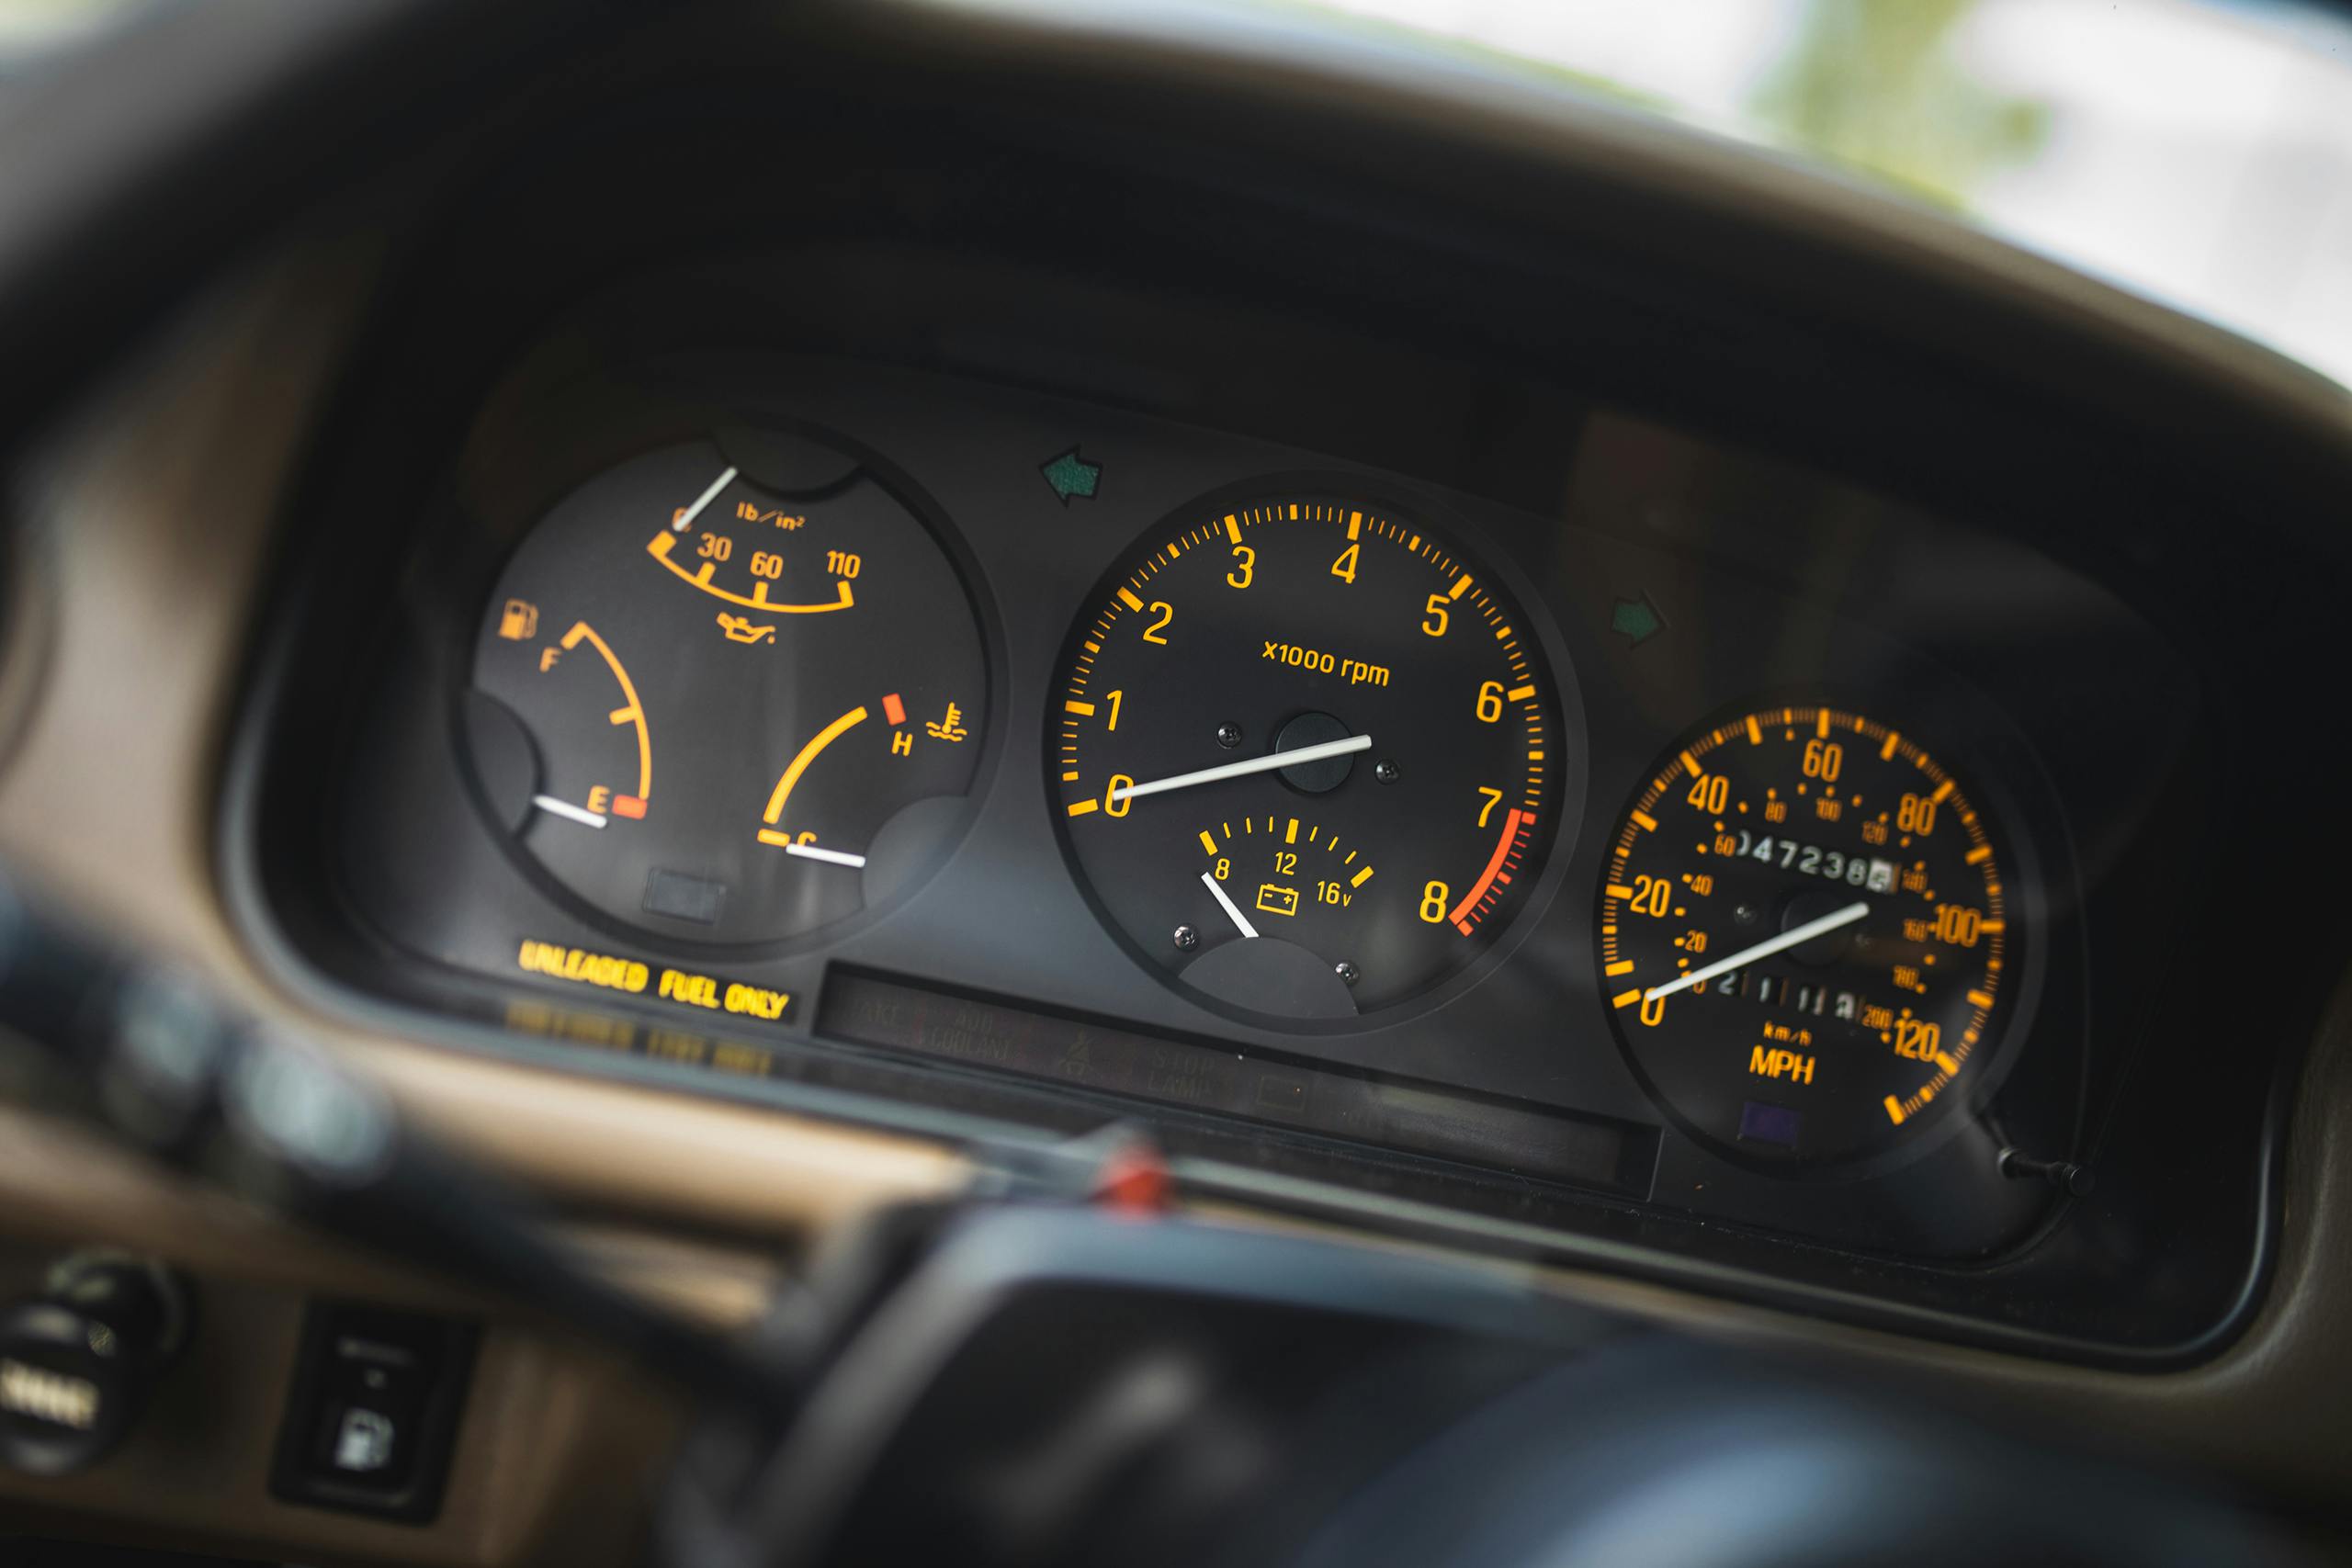 1983 Mazda RX7 interior dash gauges